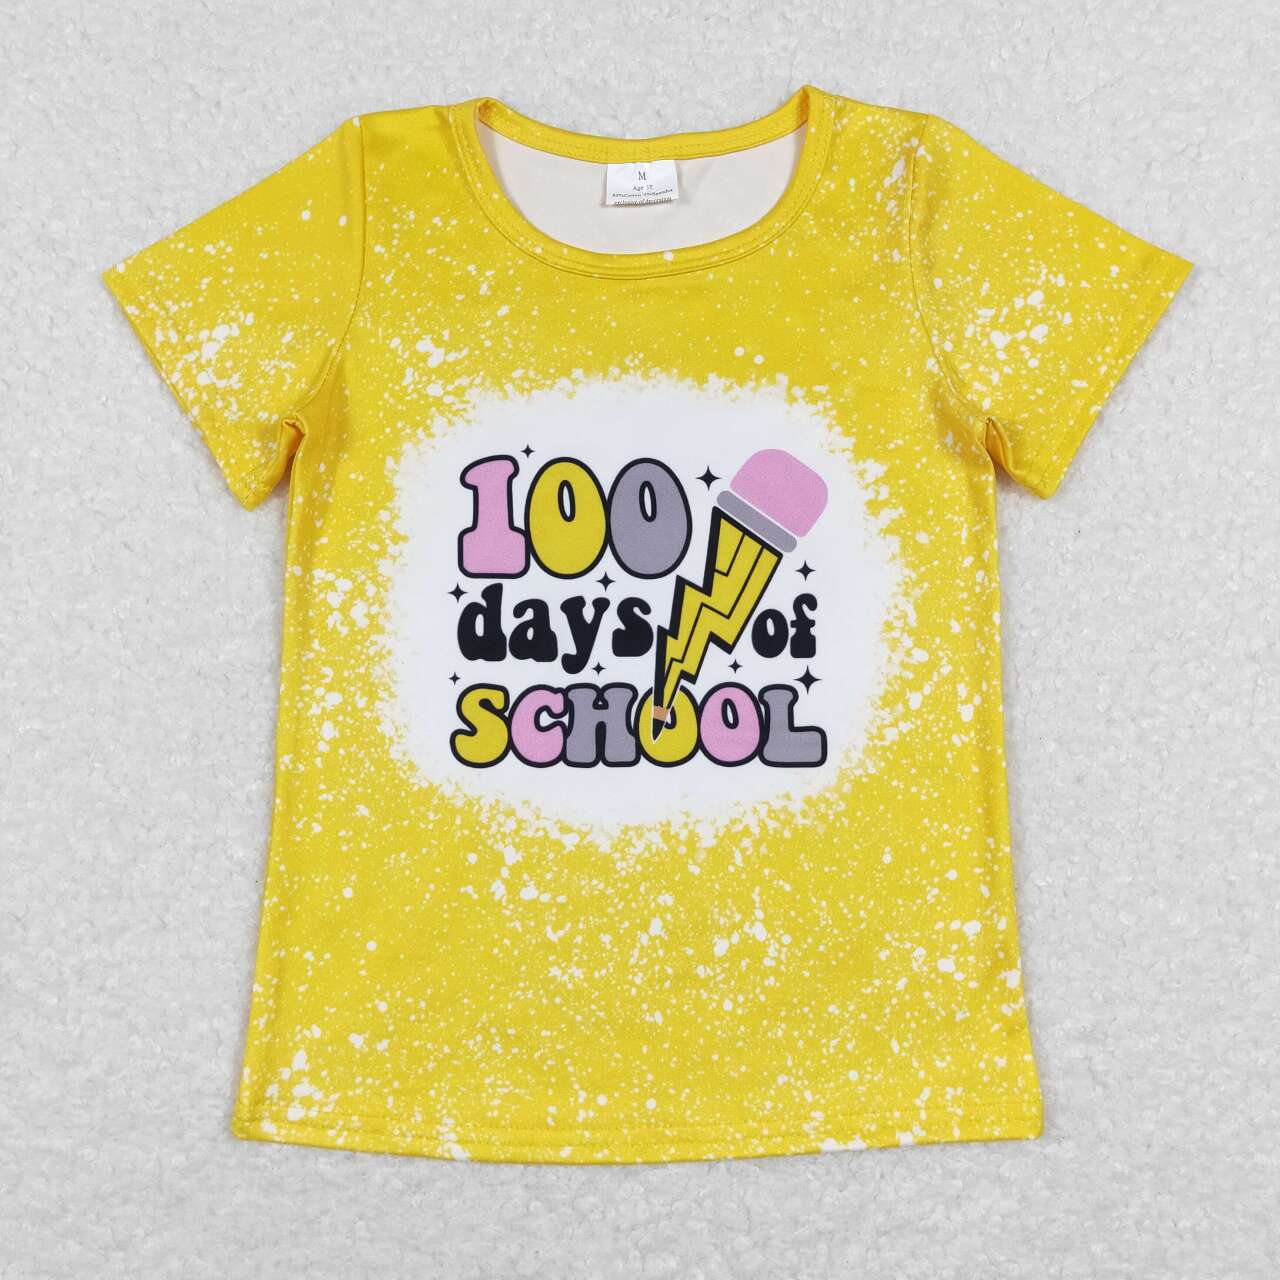 yellow back to school top-100 days of school